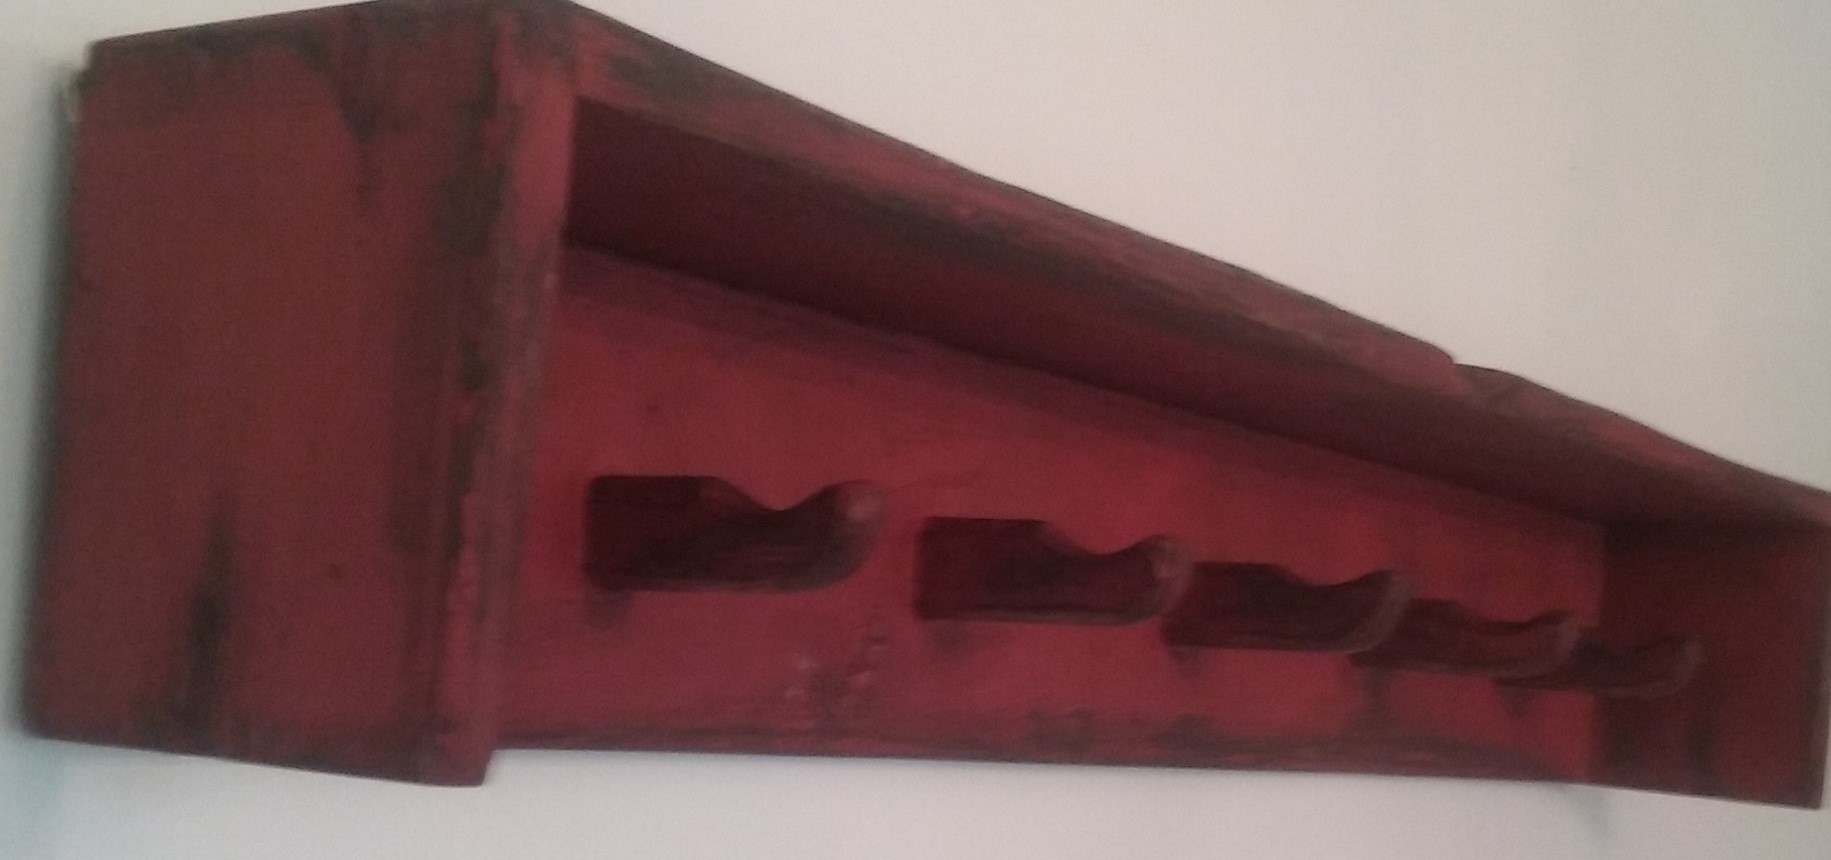 Rustic Shelf with Handmade Pegs